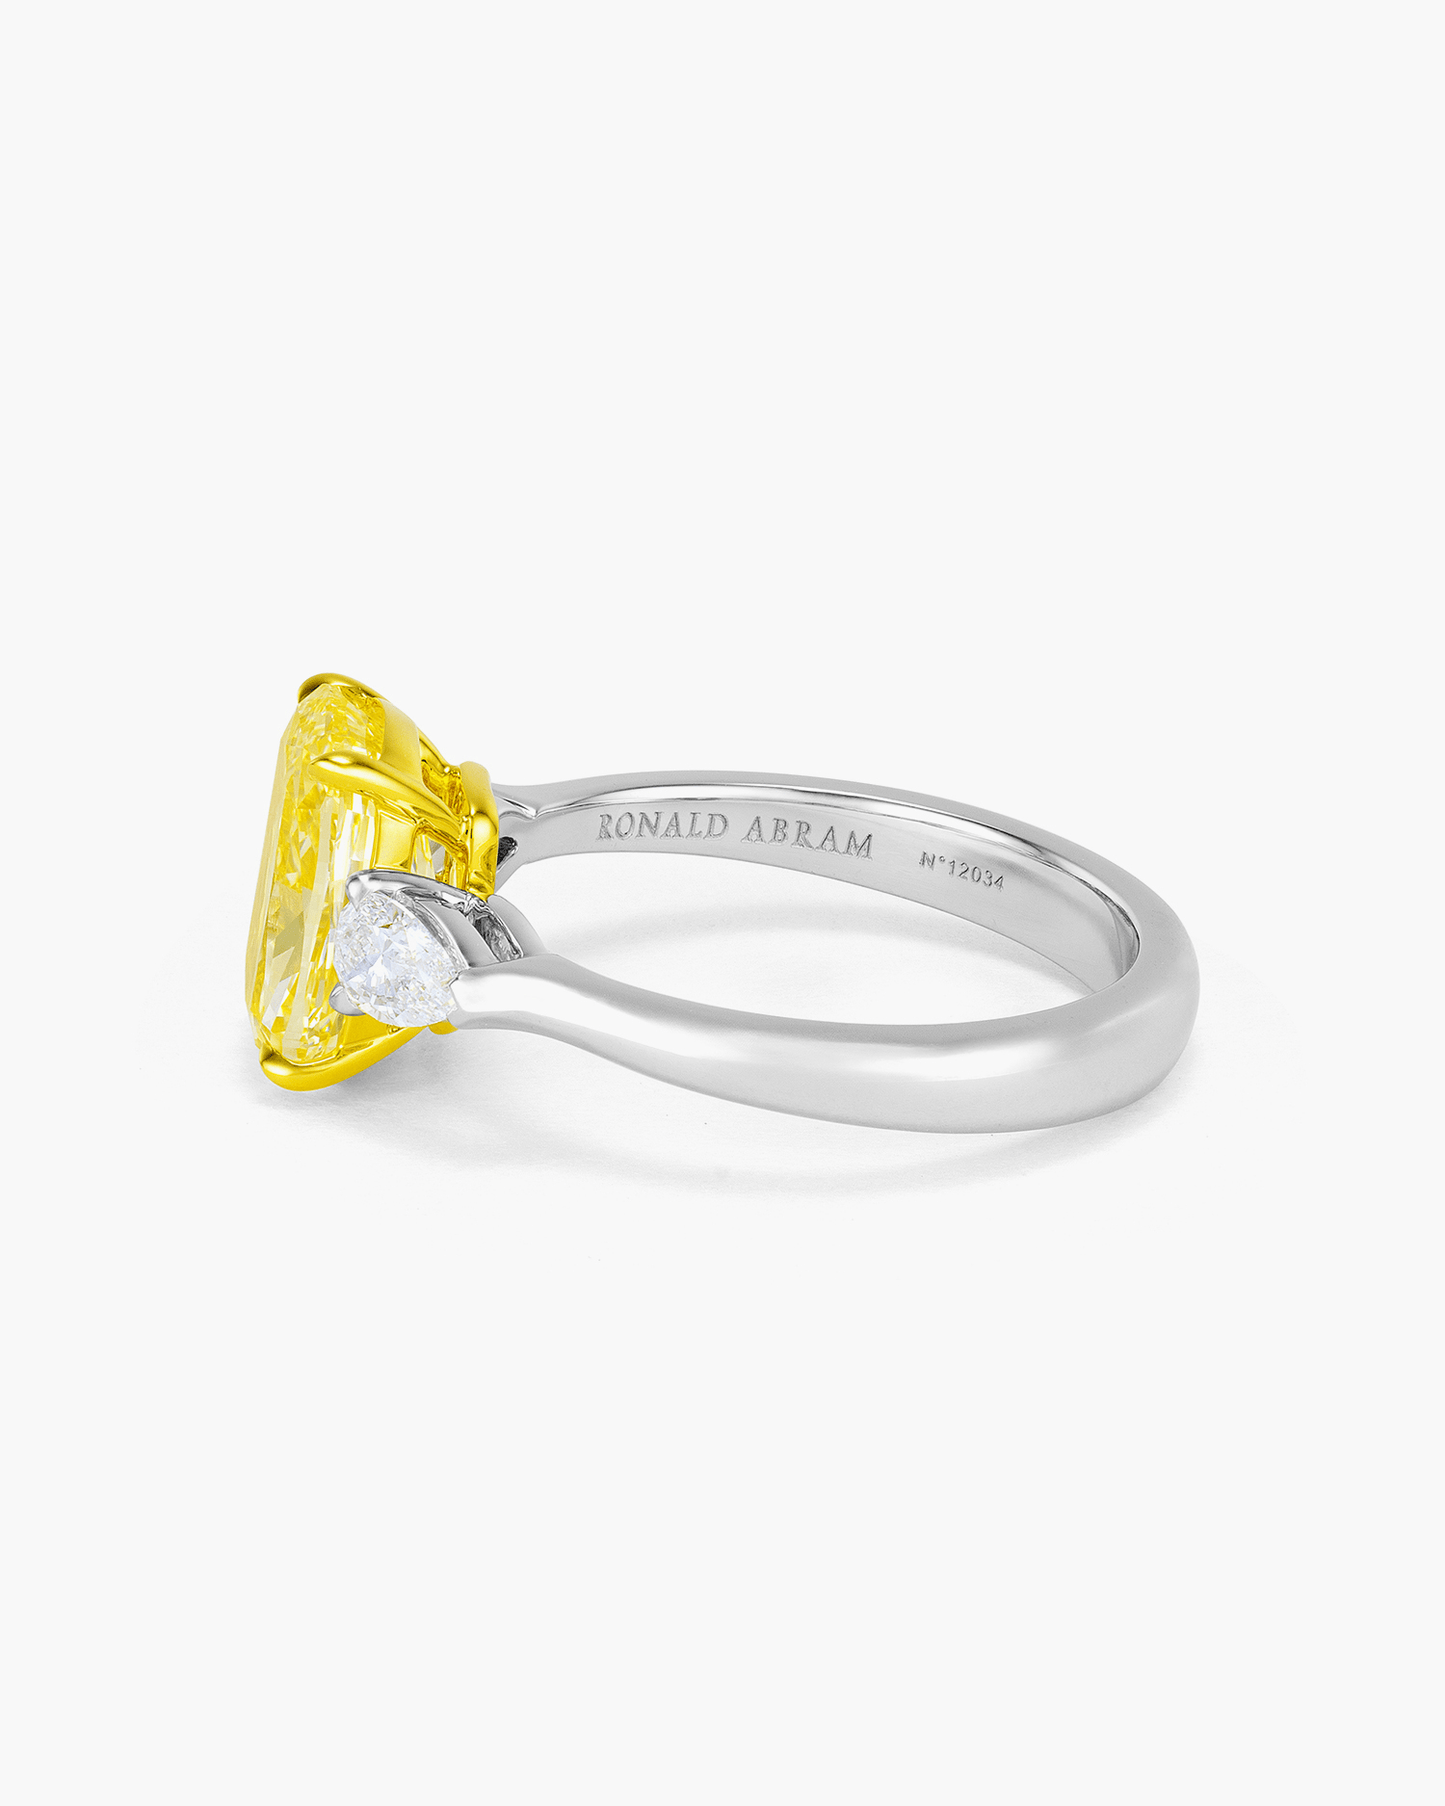 2.62 carat Cushion Cut Yellow and White Diamond Ring